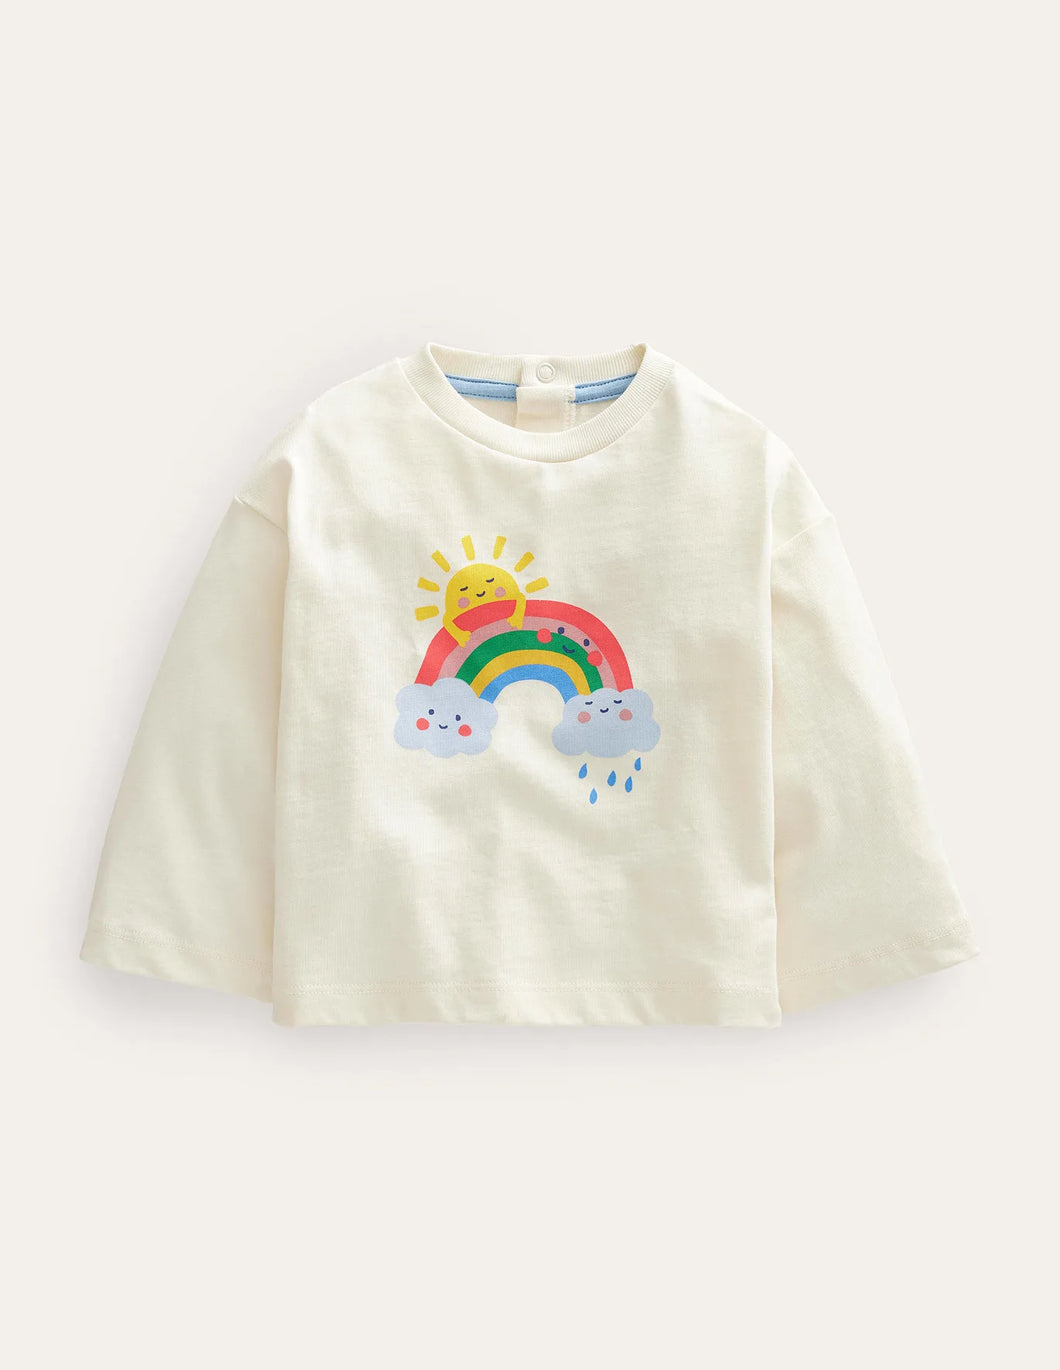 NWT Mini Boden Relaxed Rainbow T-shirt